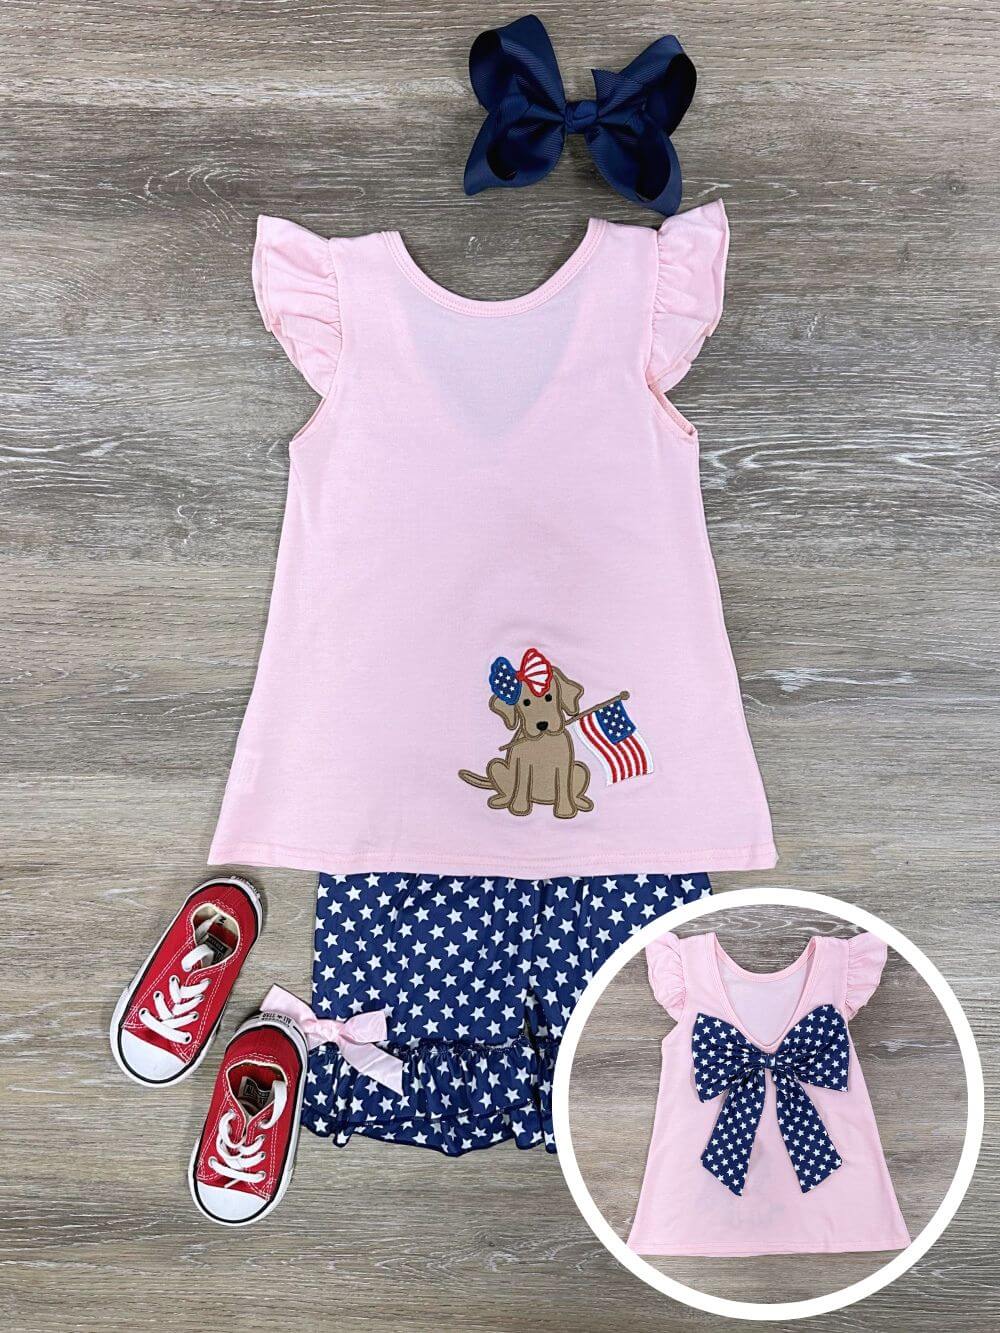 Patriotic Pooch Pink & Blue Girls Polka Dot Shorts Outfit - Sydney So Sweet